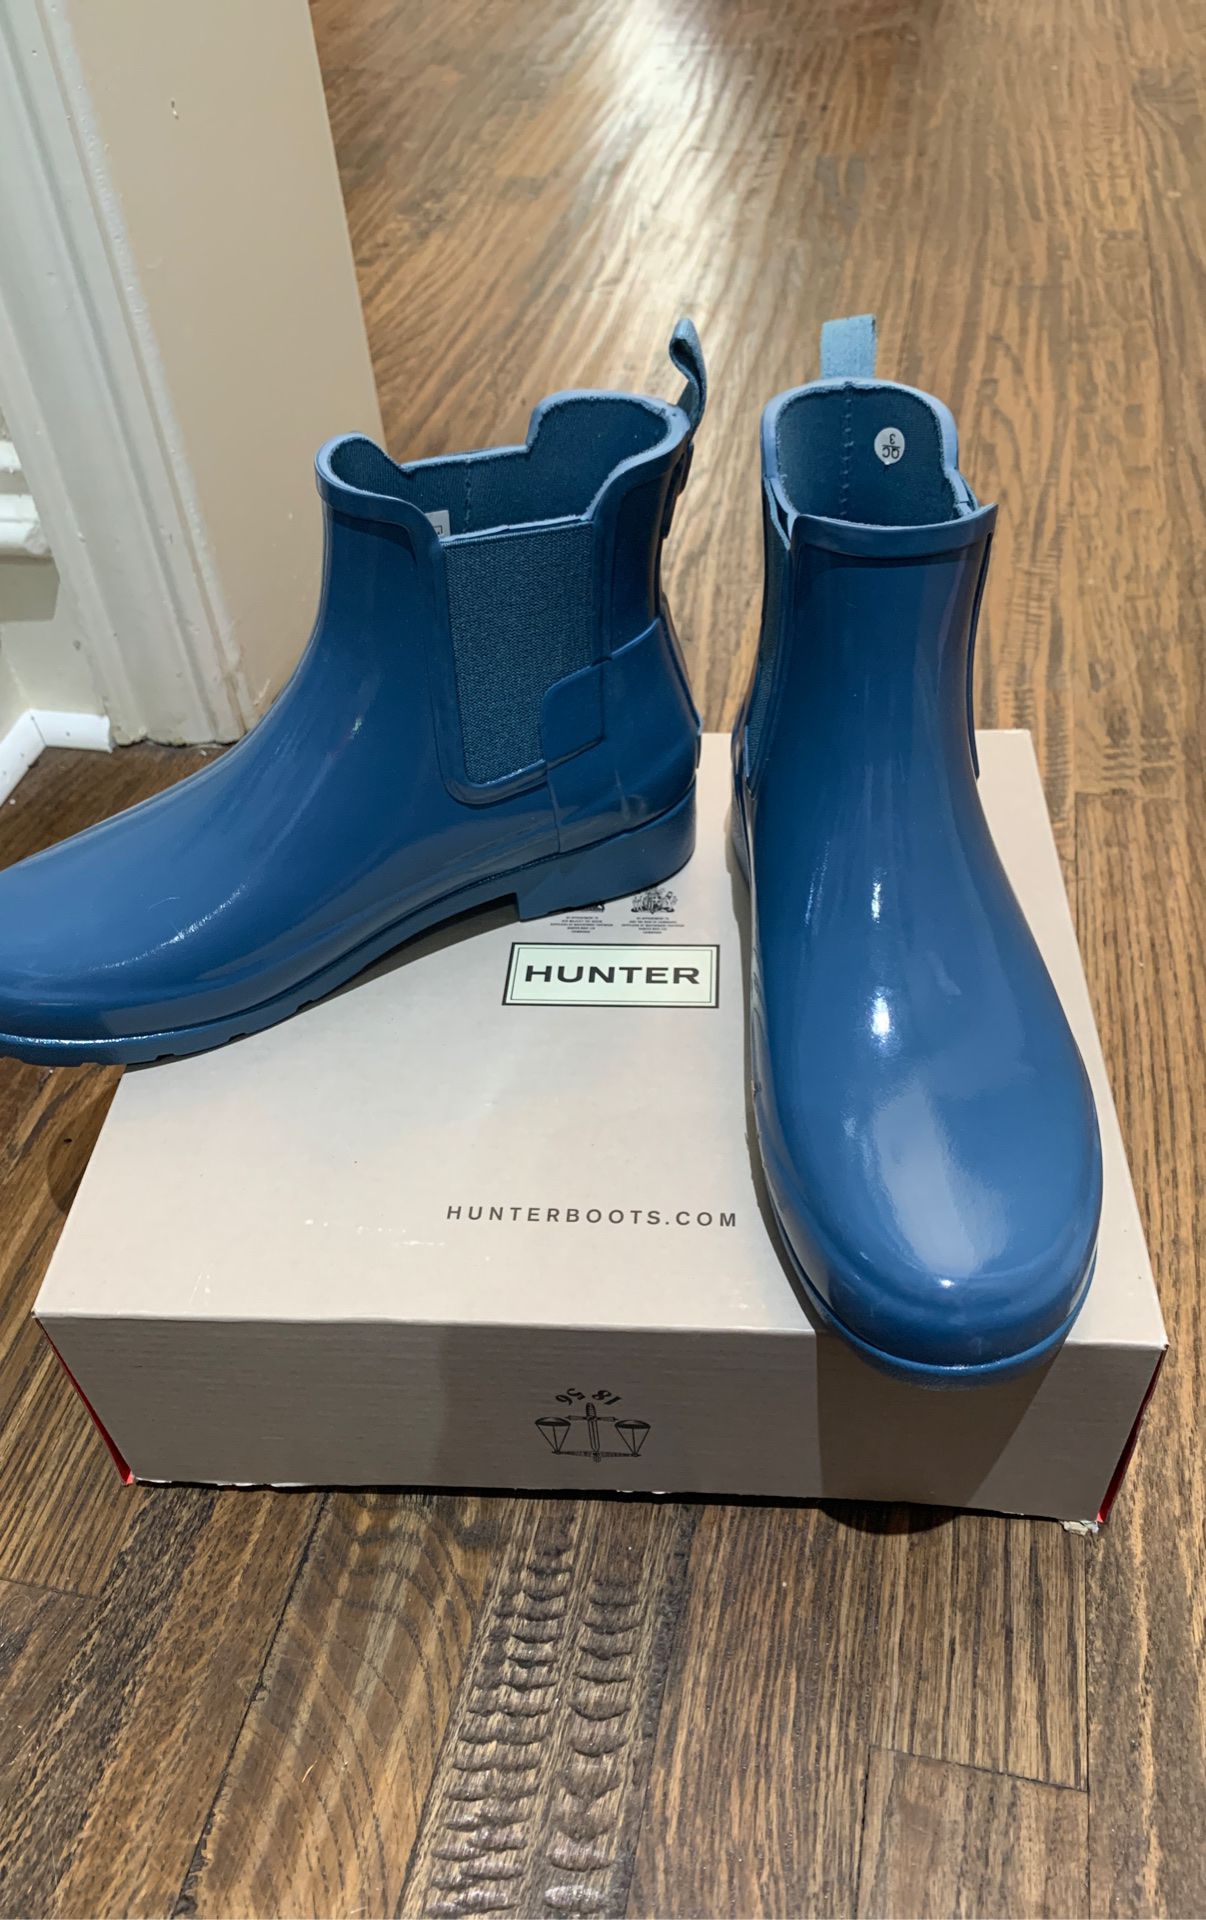 Hunter short rain boots, size 7, blue, new